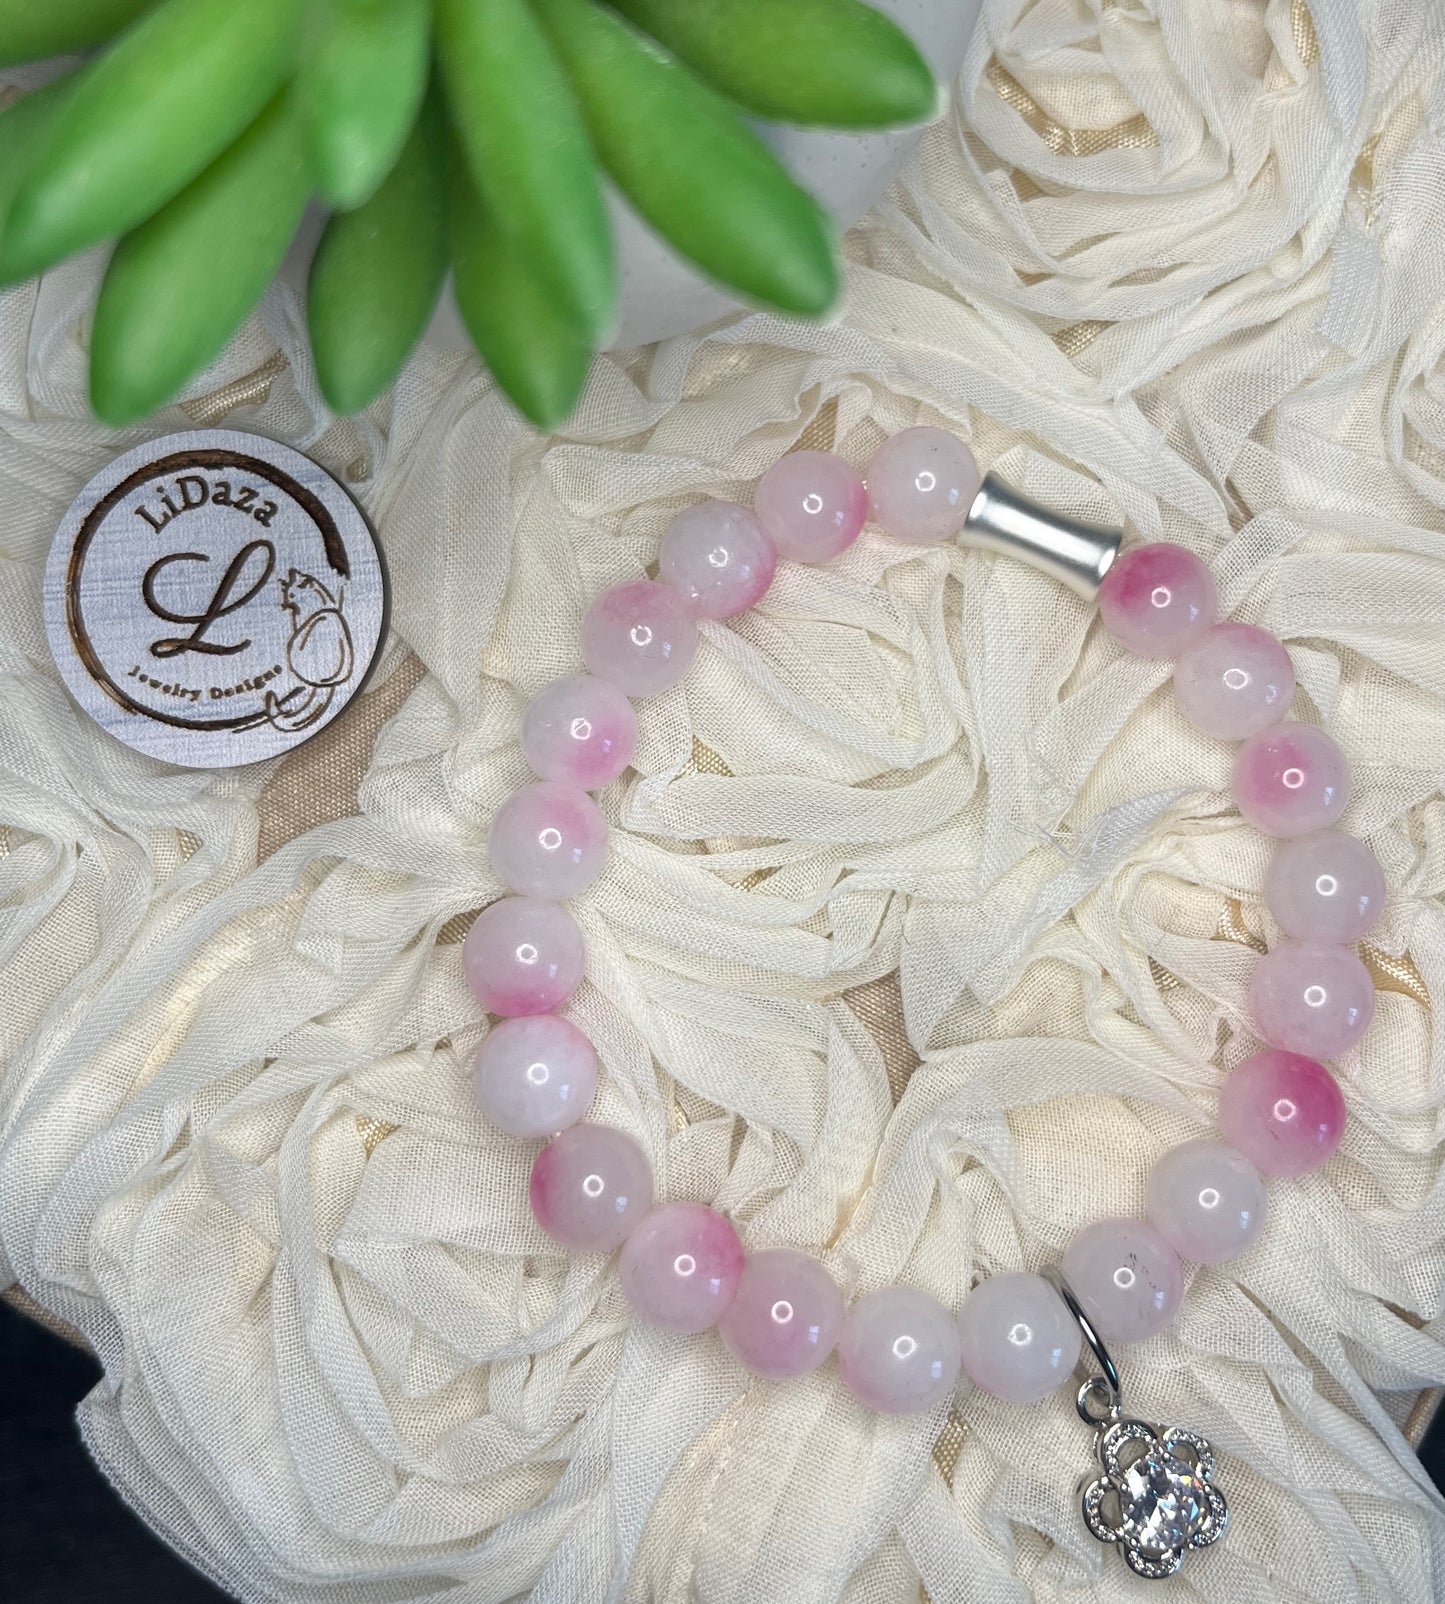 Jade ( pink and white) bracelet